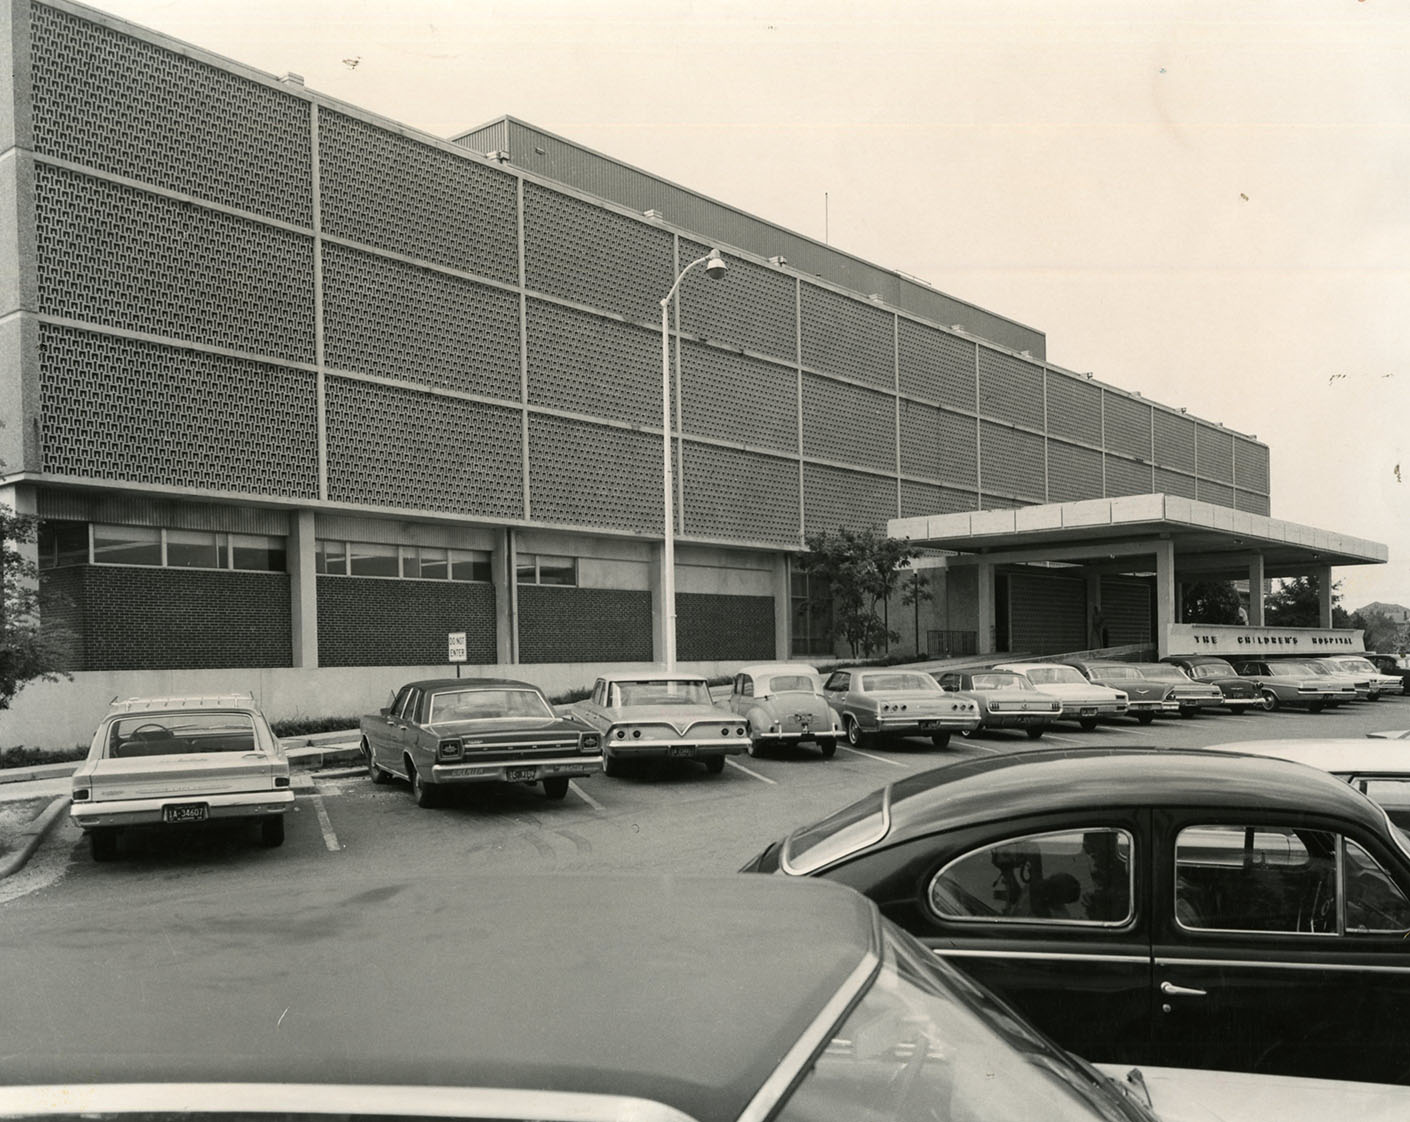 1961- New Children's Hospital Building Opens